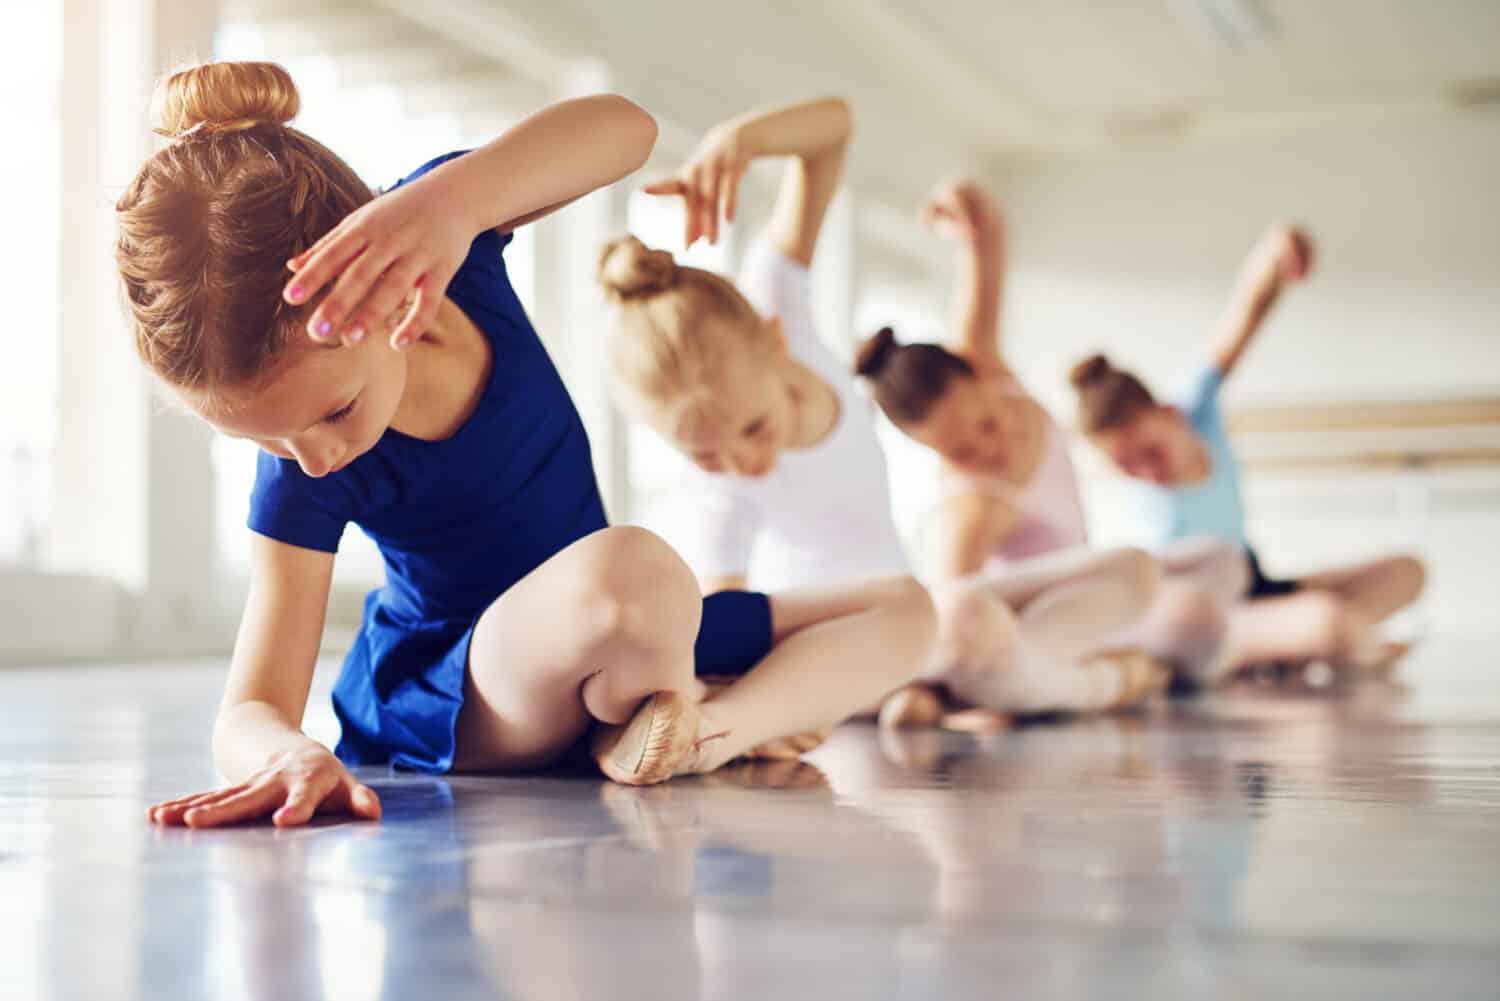 Little ballerinas doing exercises and bending sitting on floor in ballet class.